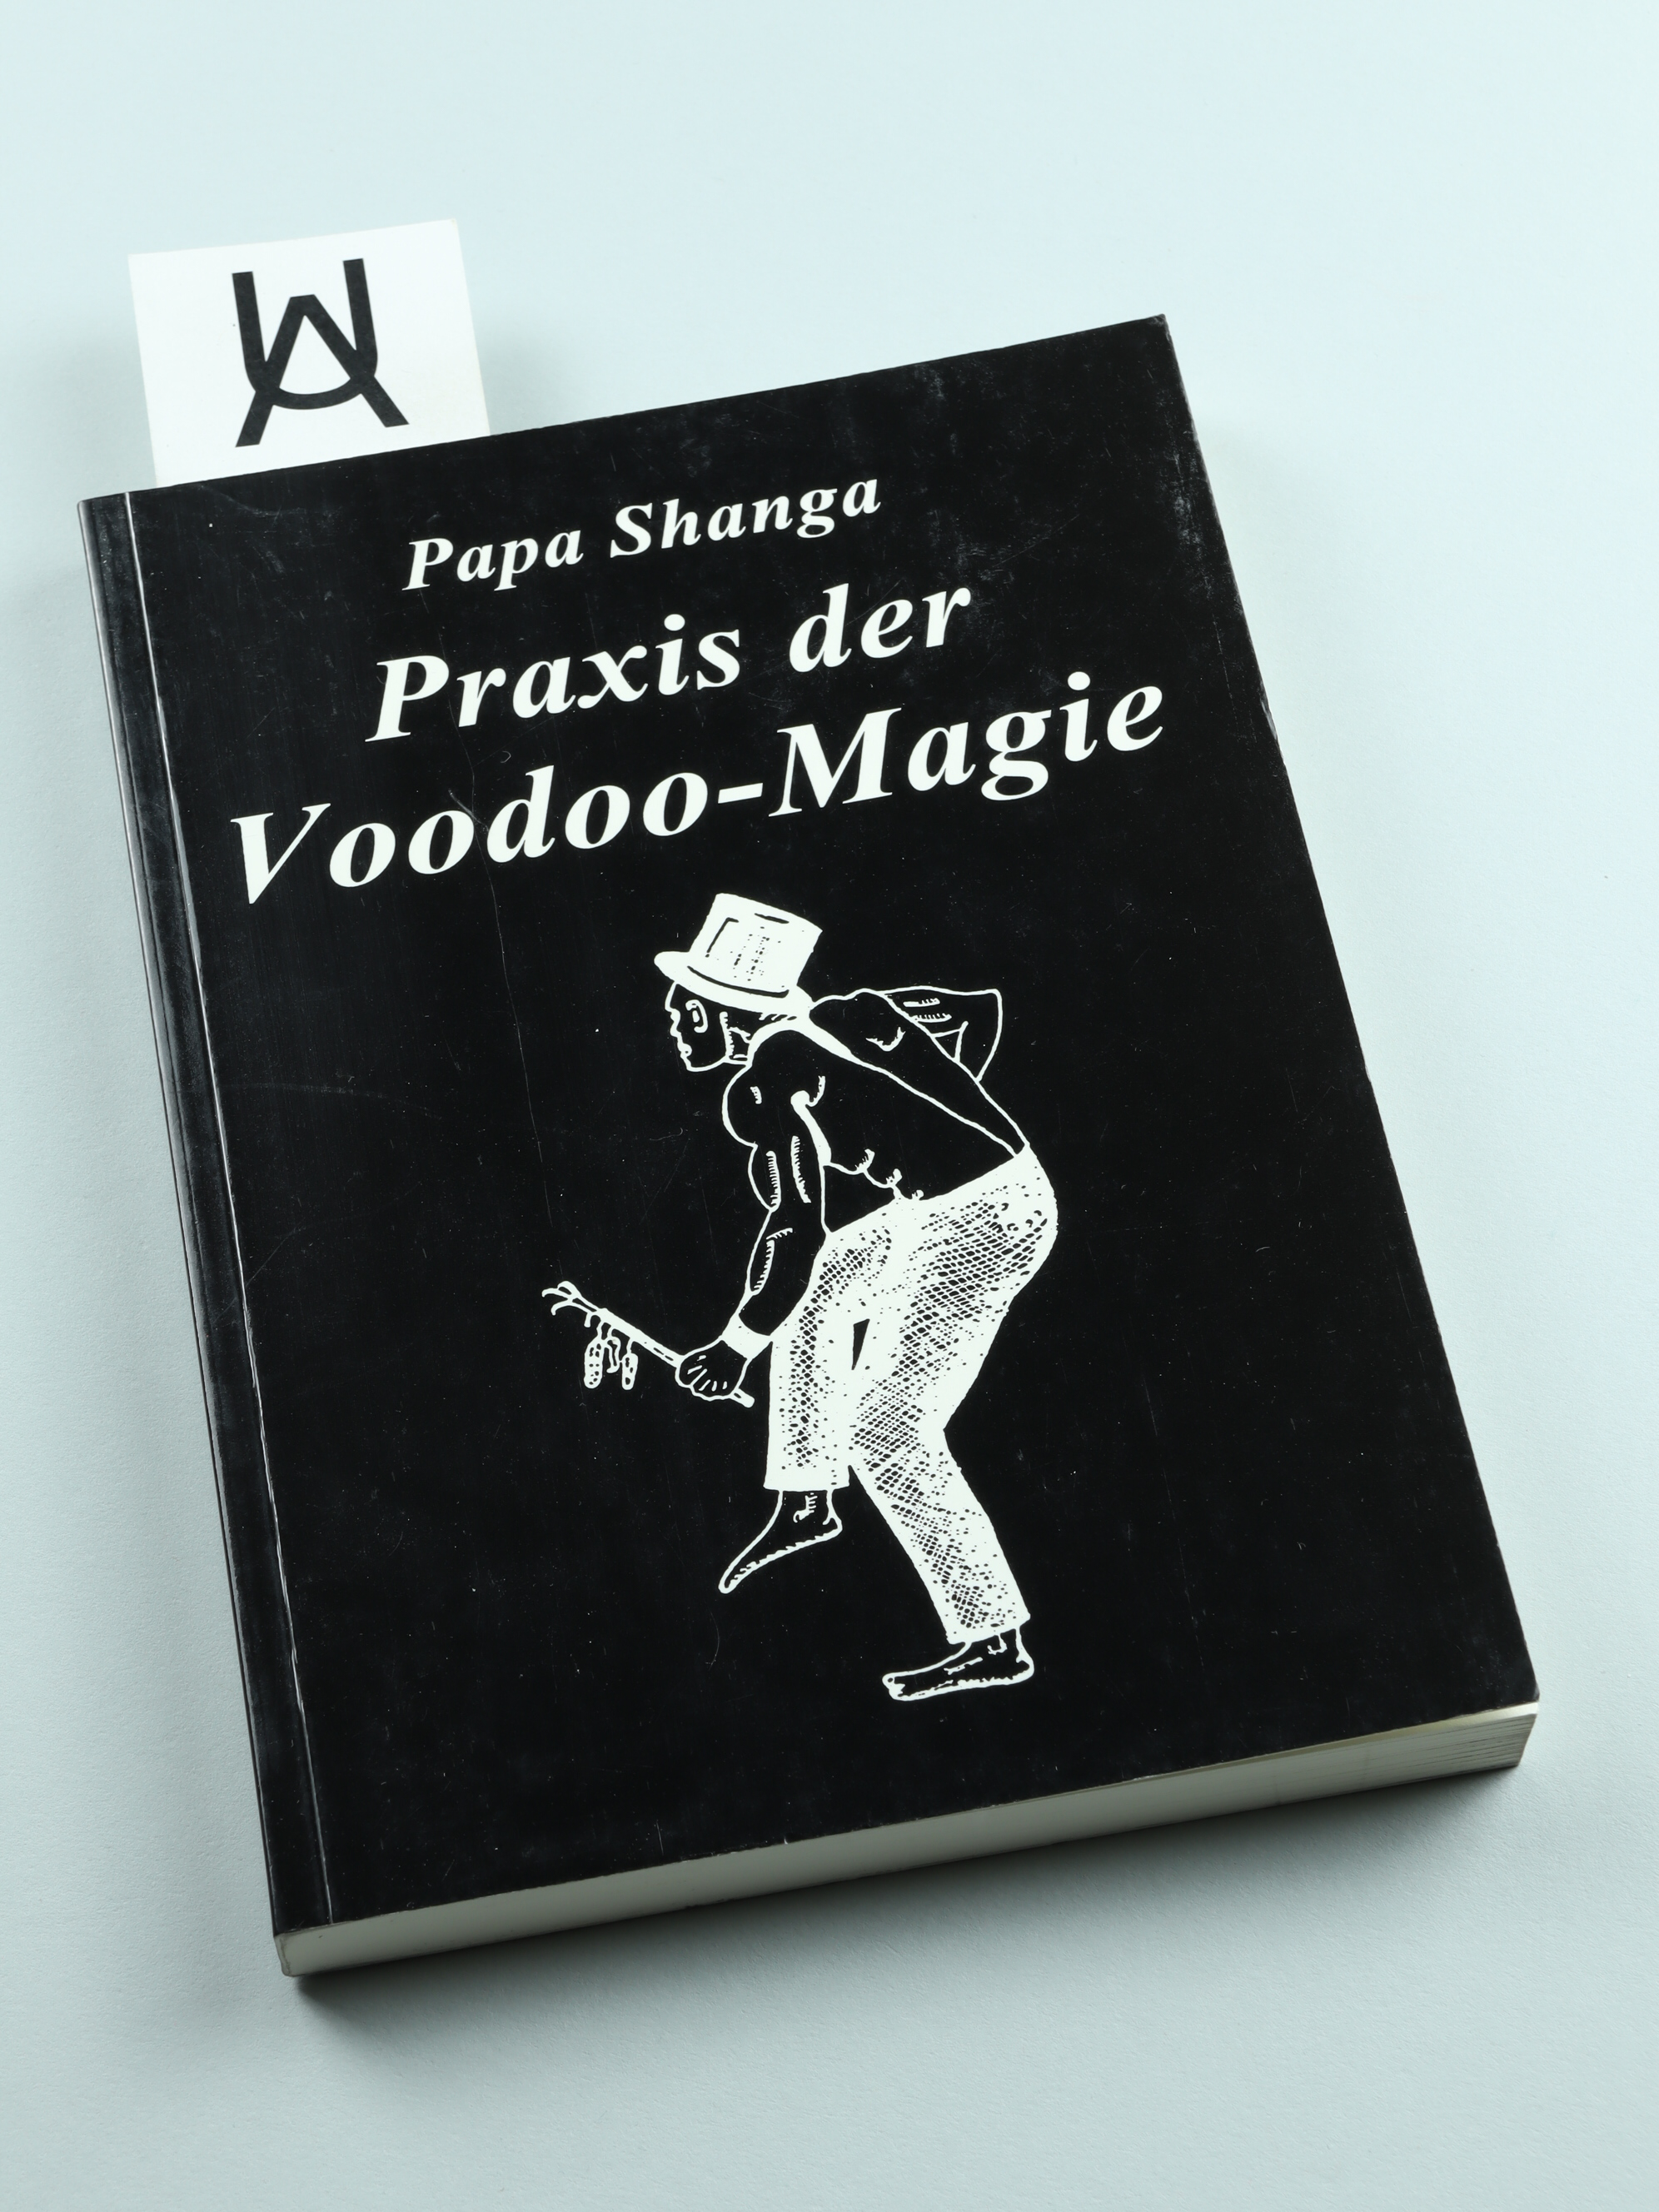 Praxis der Voodoo-Magie. Techniken, Rituale und Praktiken des Voodo. - Papa Shanga»